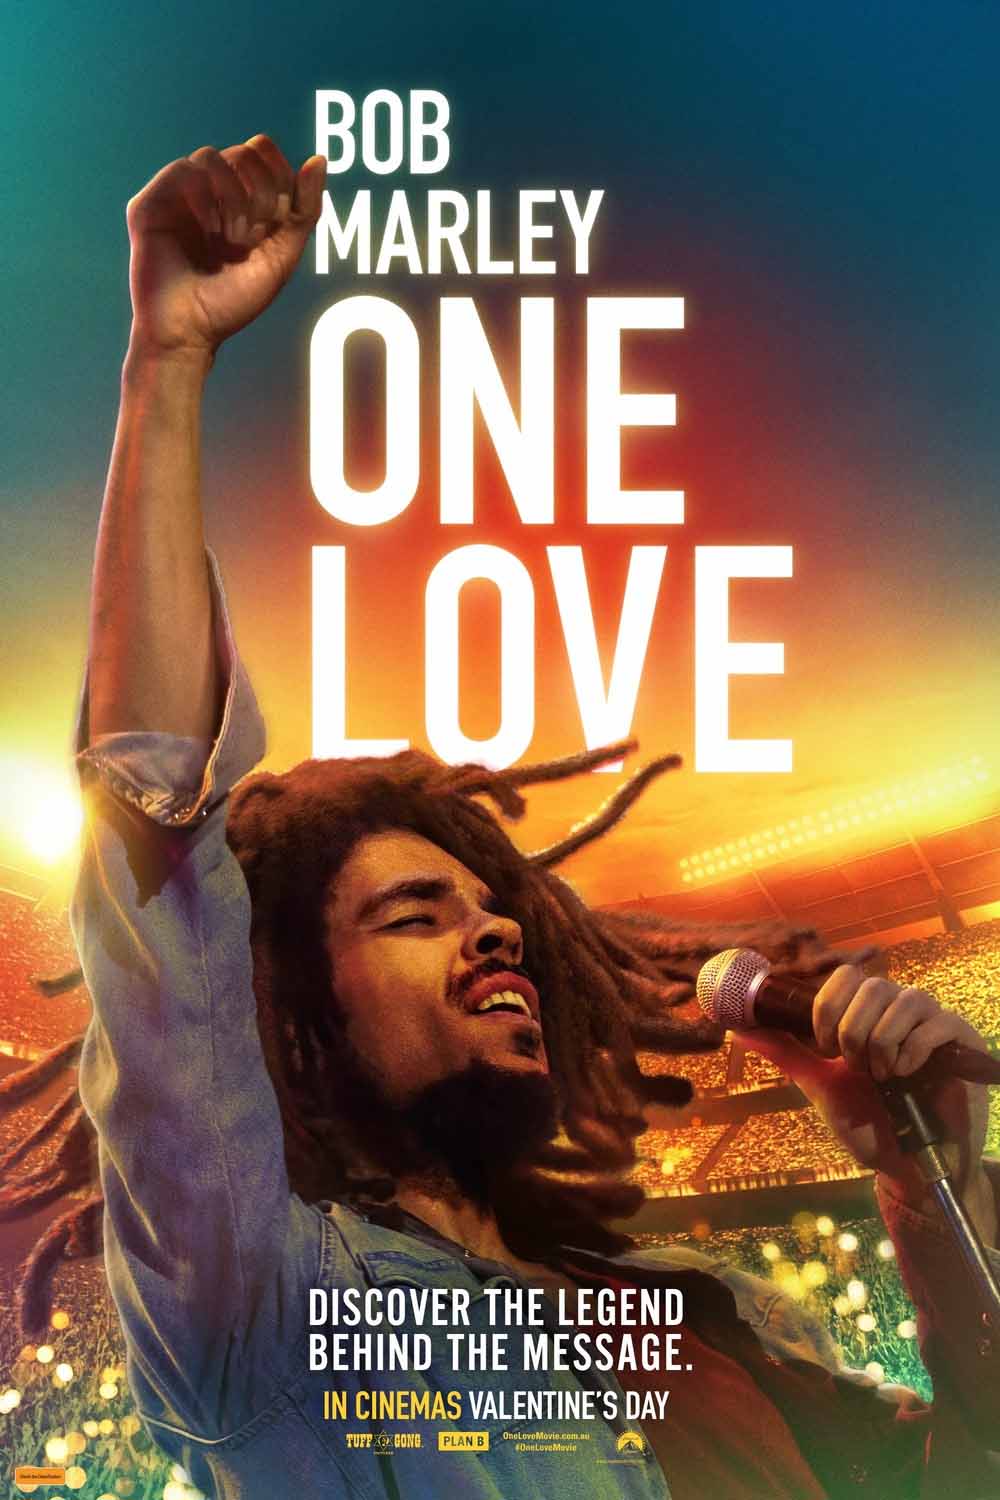 Bob Marley One Love movie poster